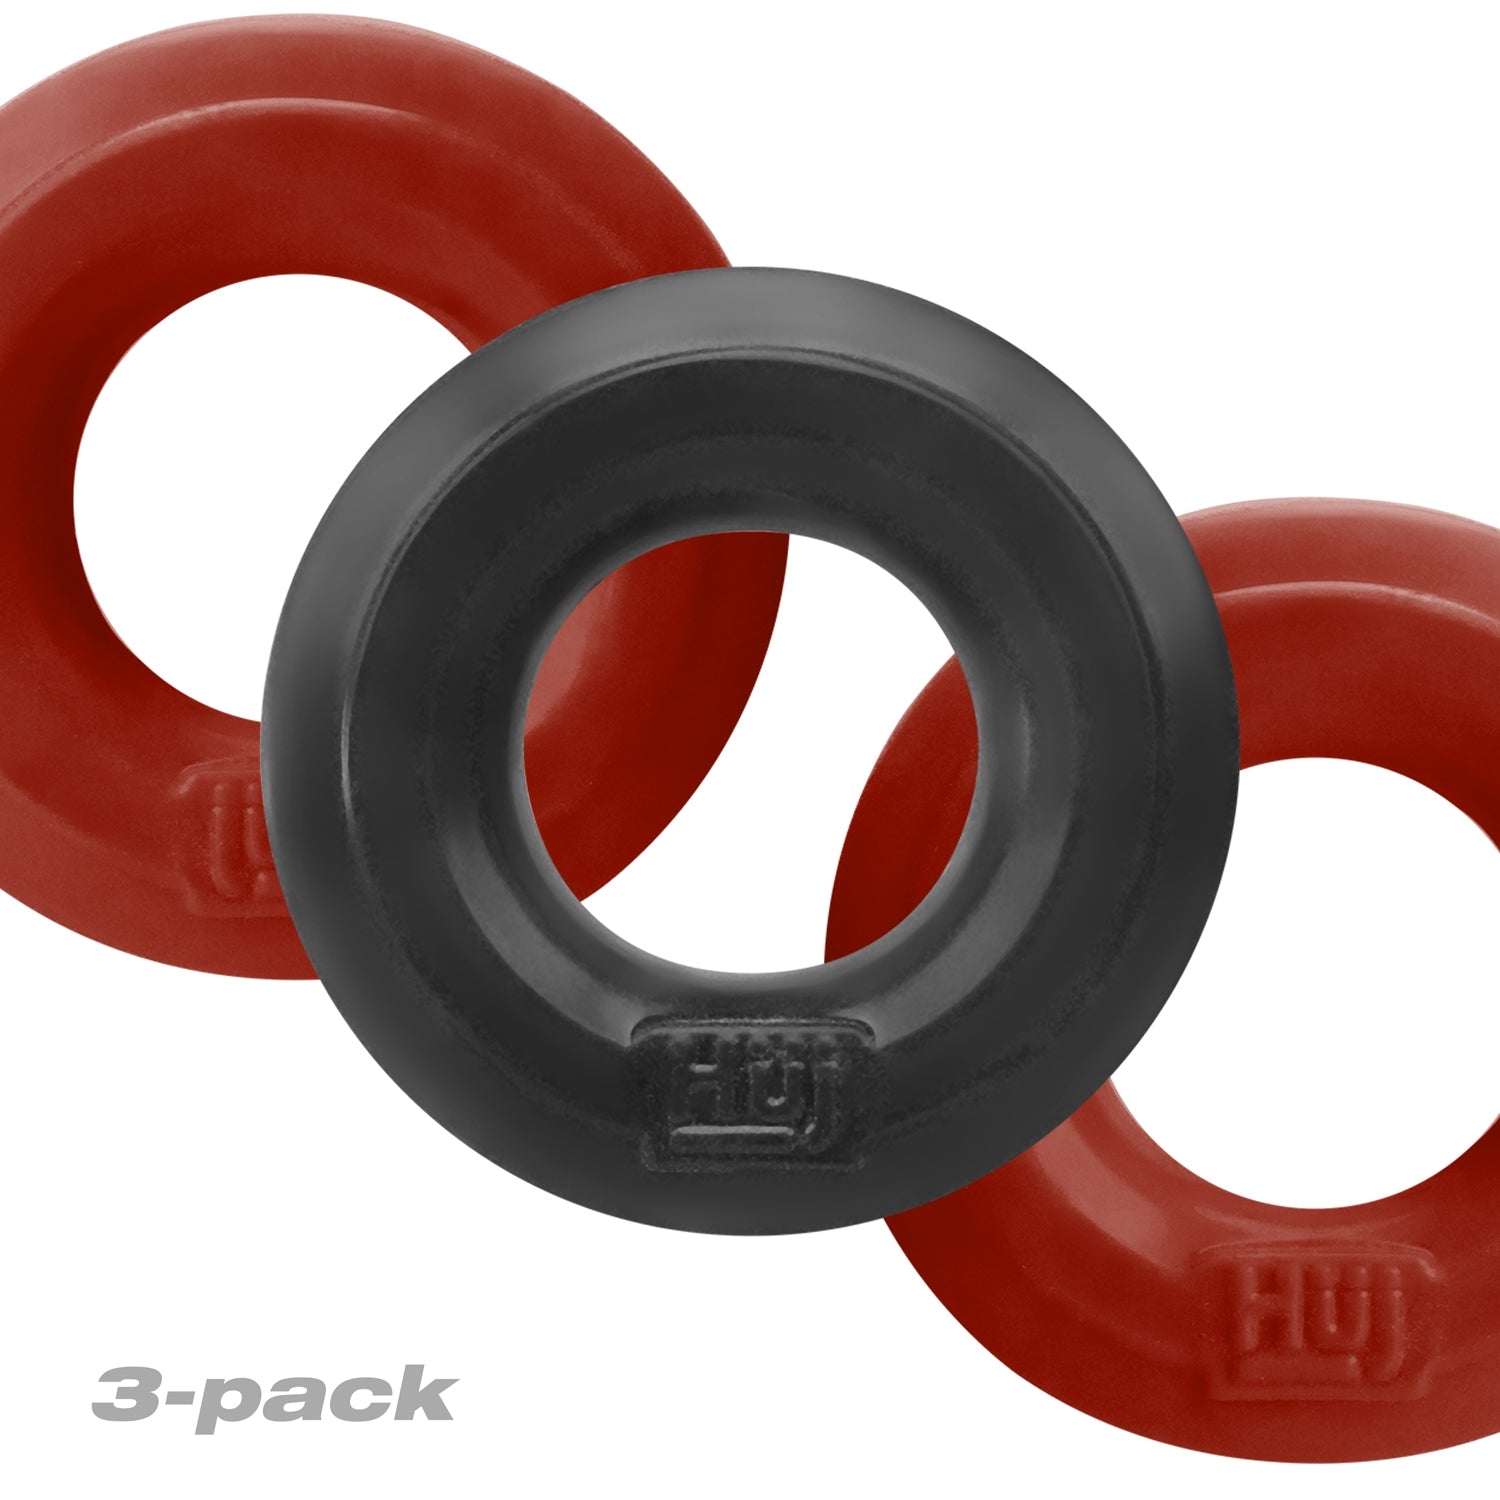 Hunkyjunk 3 C-ring 3-Pack